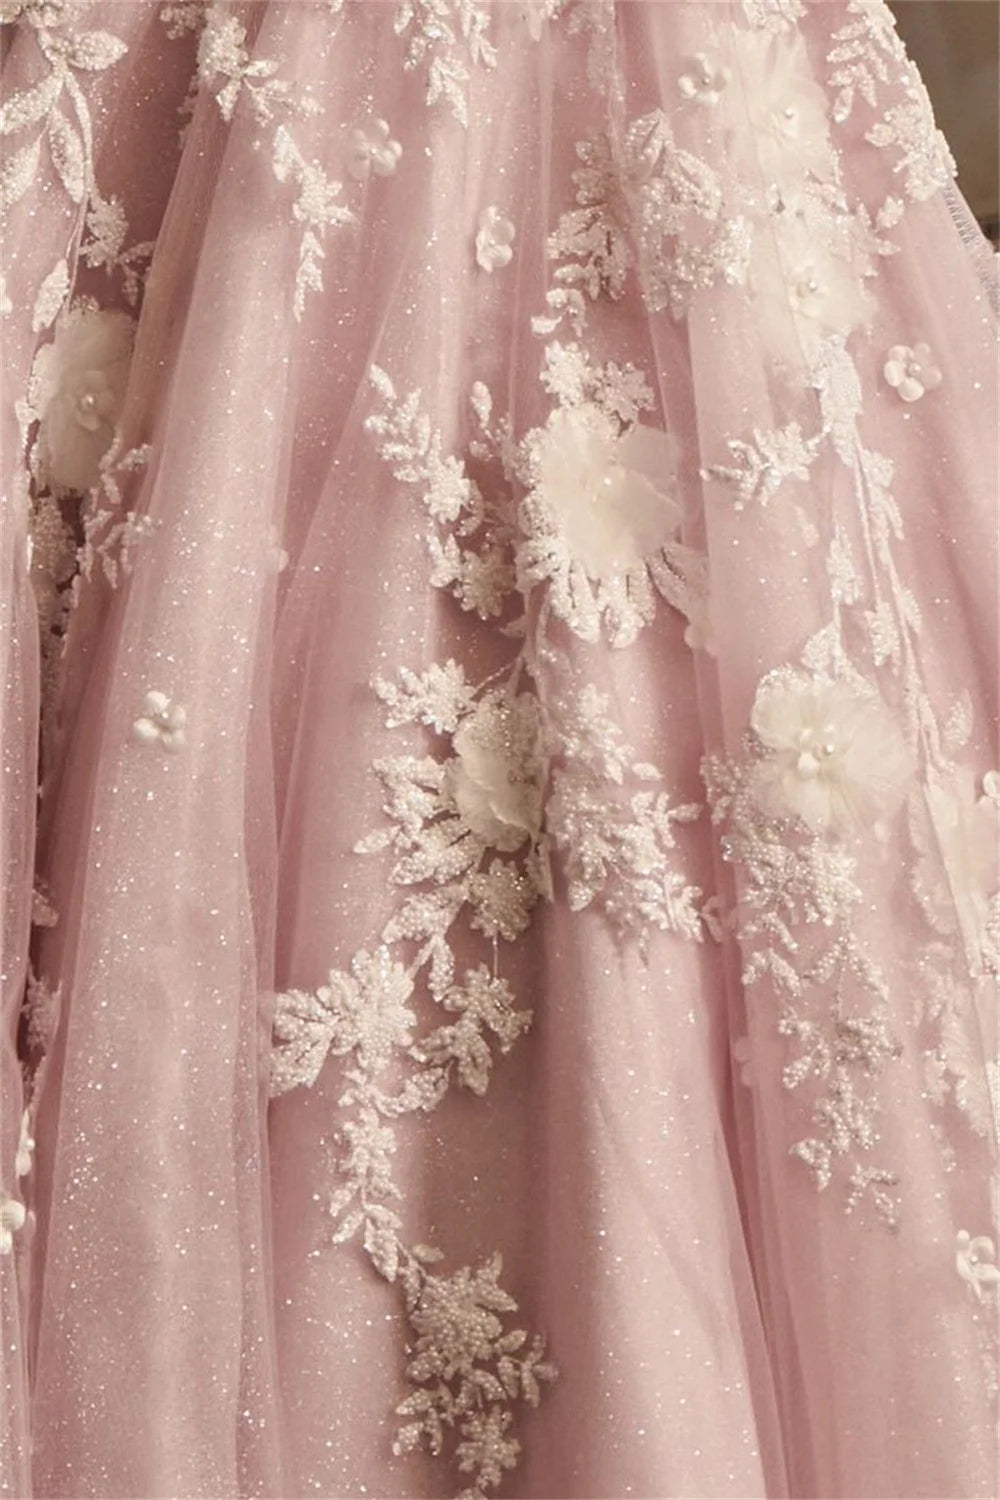 Princess A-line Party Dress Luxury 3D Flower Evening Dresses Sweet Light Pink Vestidos De Noche V-neck Prom Dress